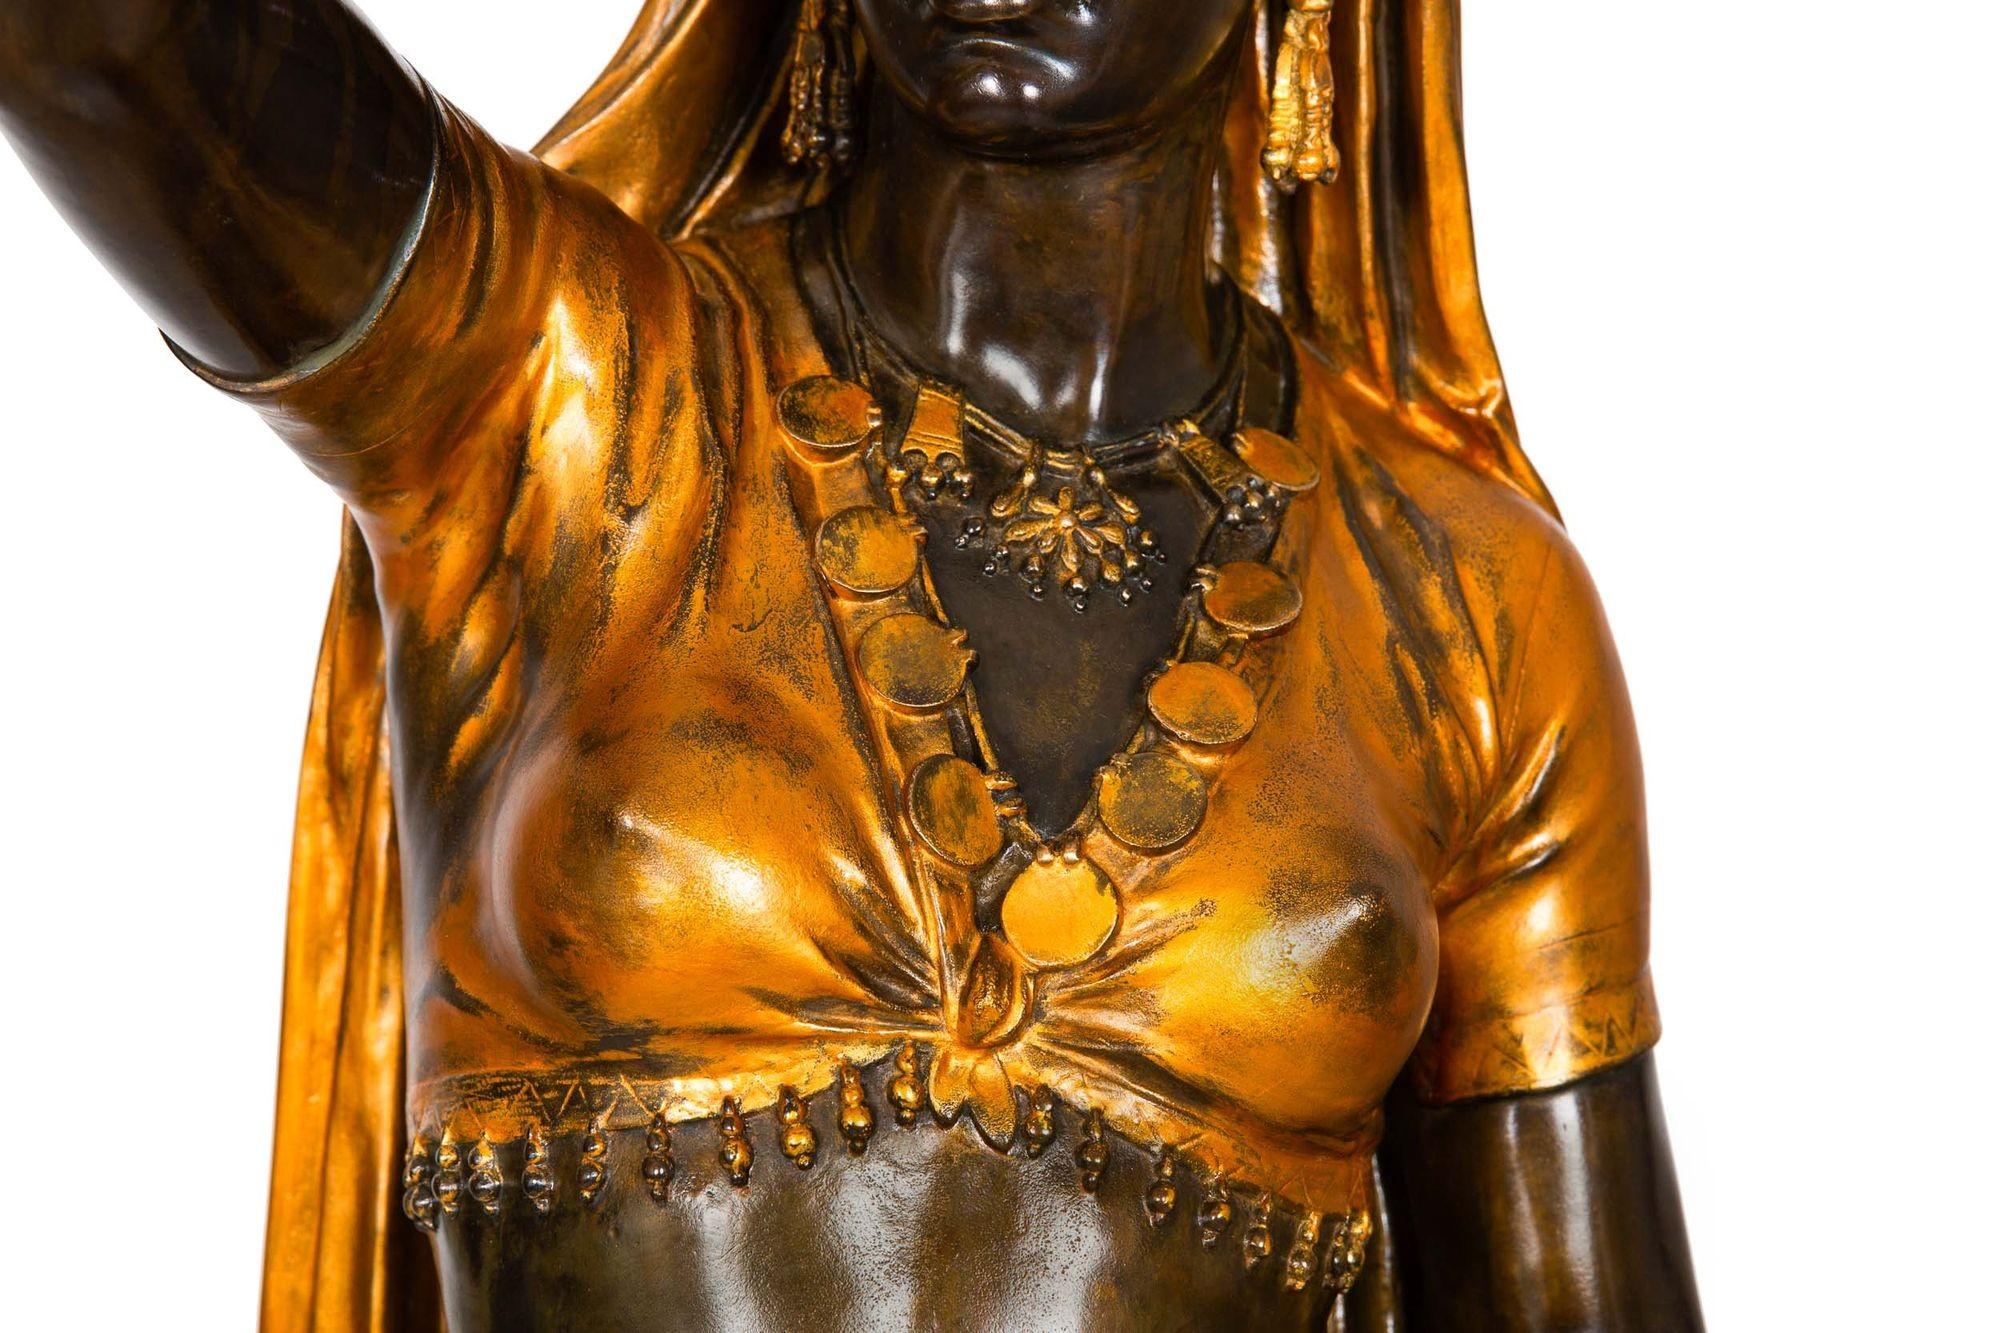 French Antique Bronze Torchiere Sculpture “Indienne Femme” by Emile Guillem 1